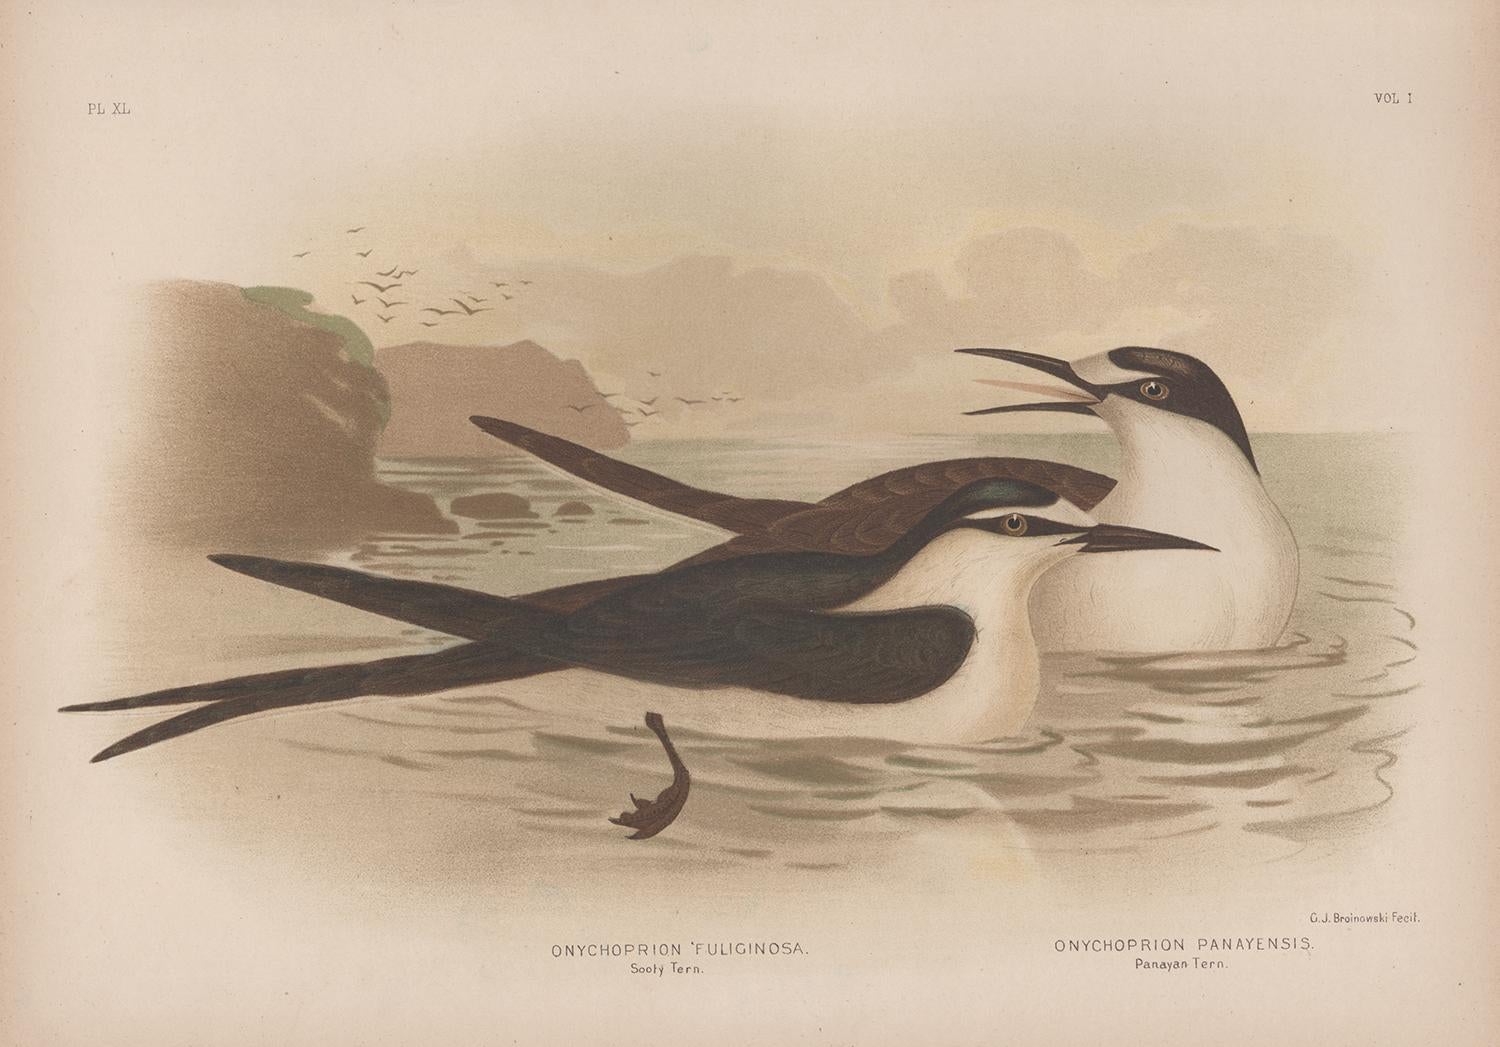 Gracius Broinowski Animal Print - Sooty Tern and Panayan Tern, antique sea bird chromolithograph print, 1889